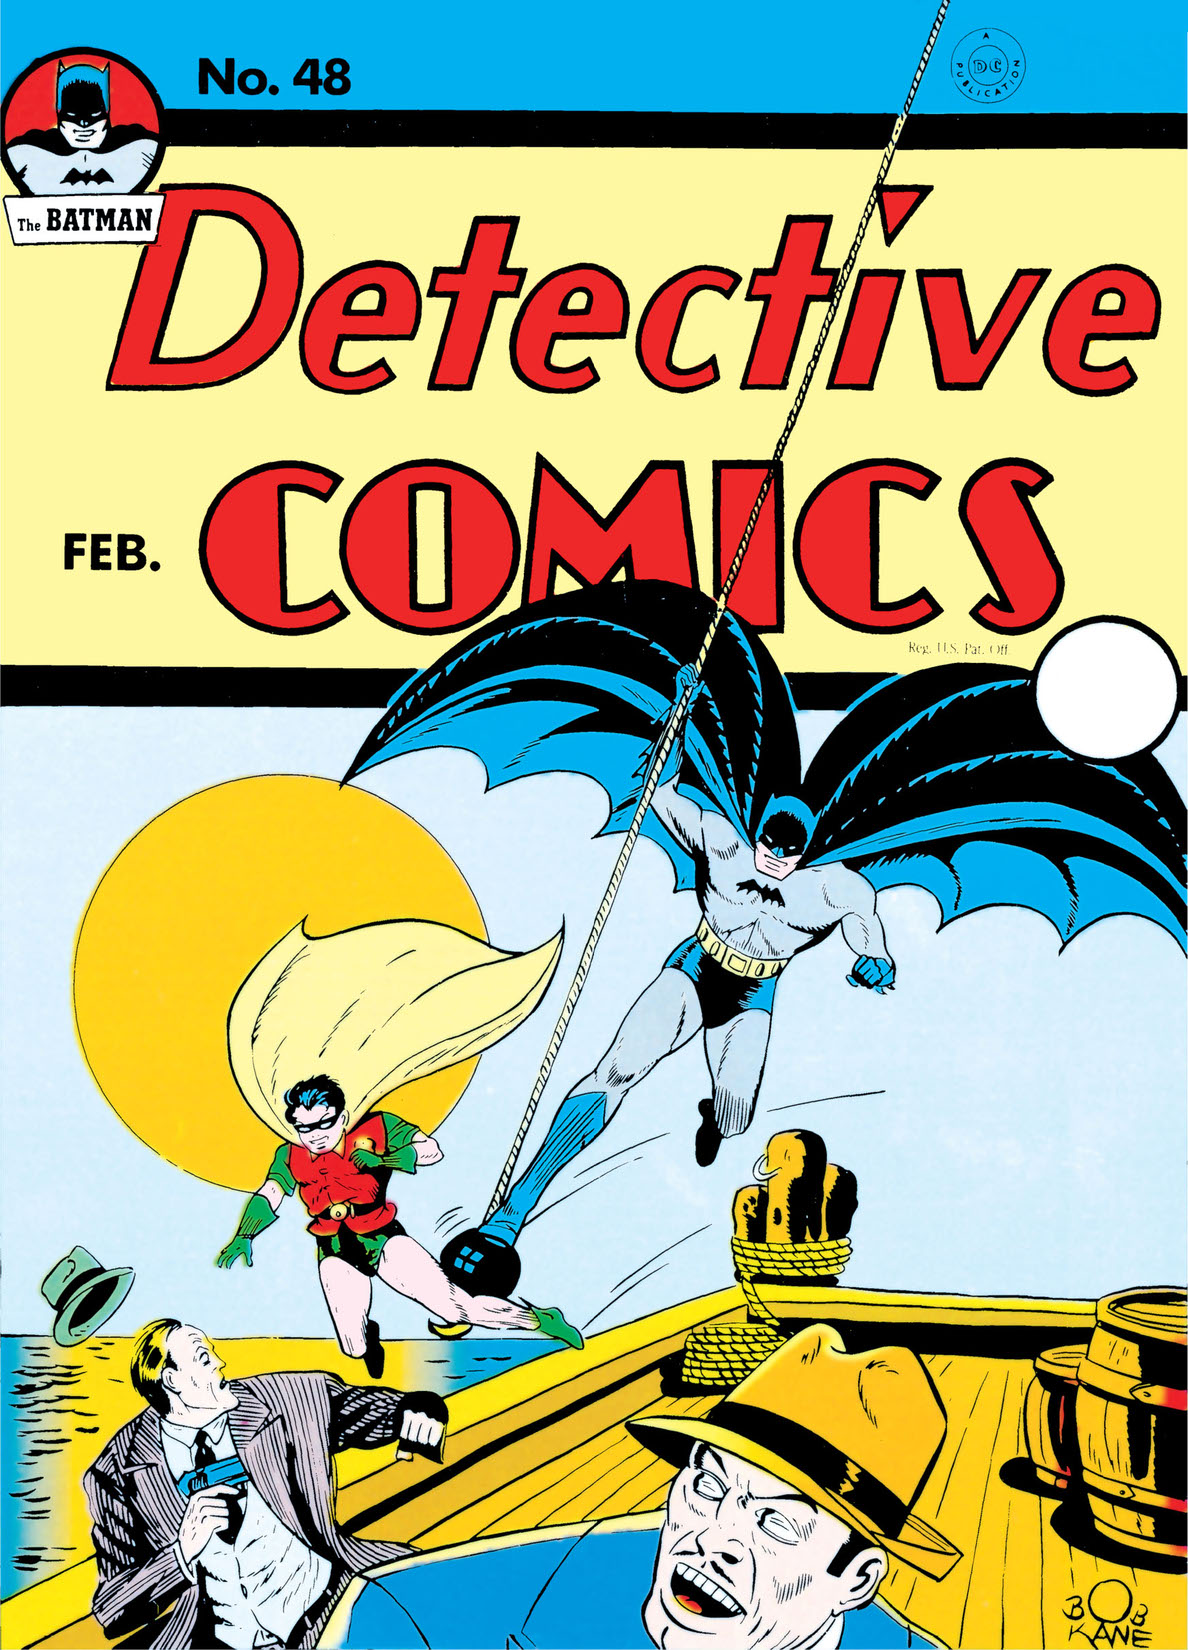 Detective Comics (1937-) #48 preview images